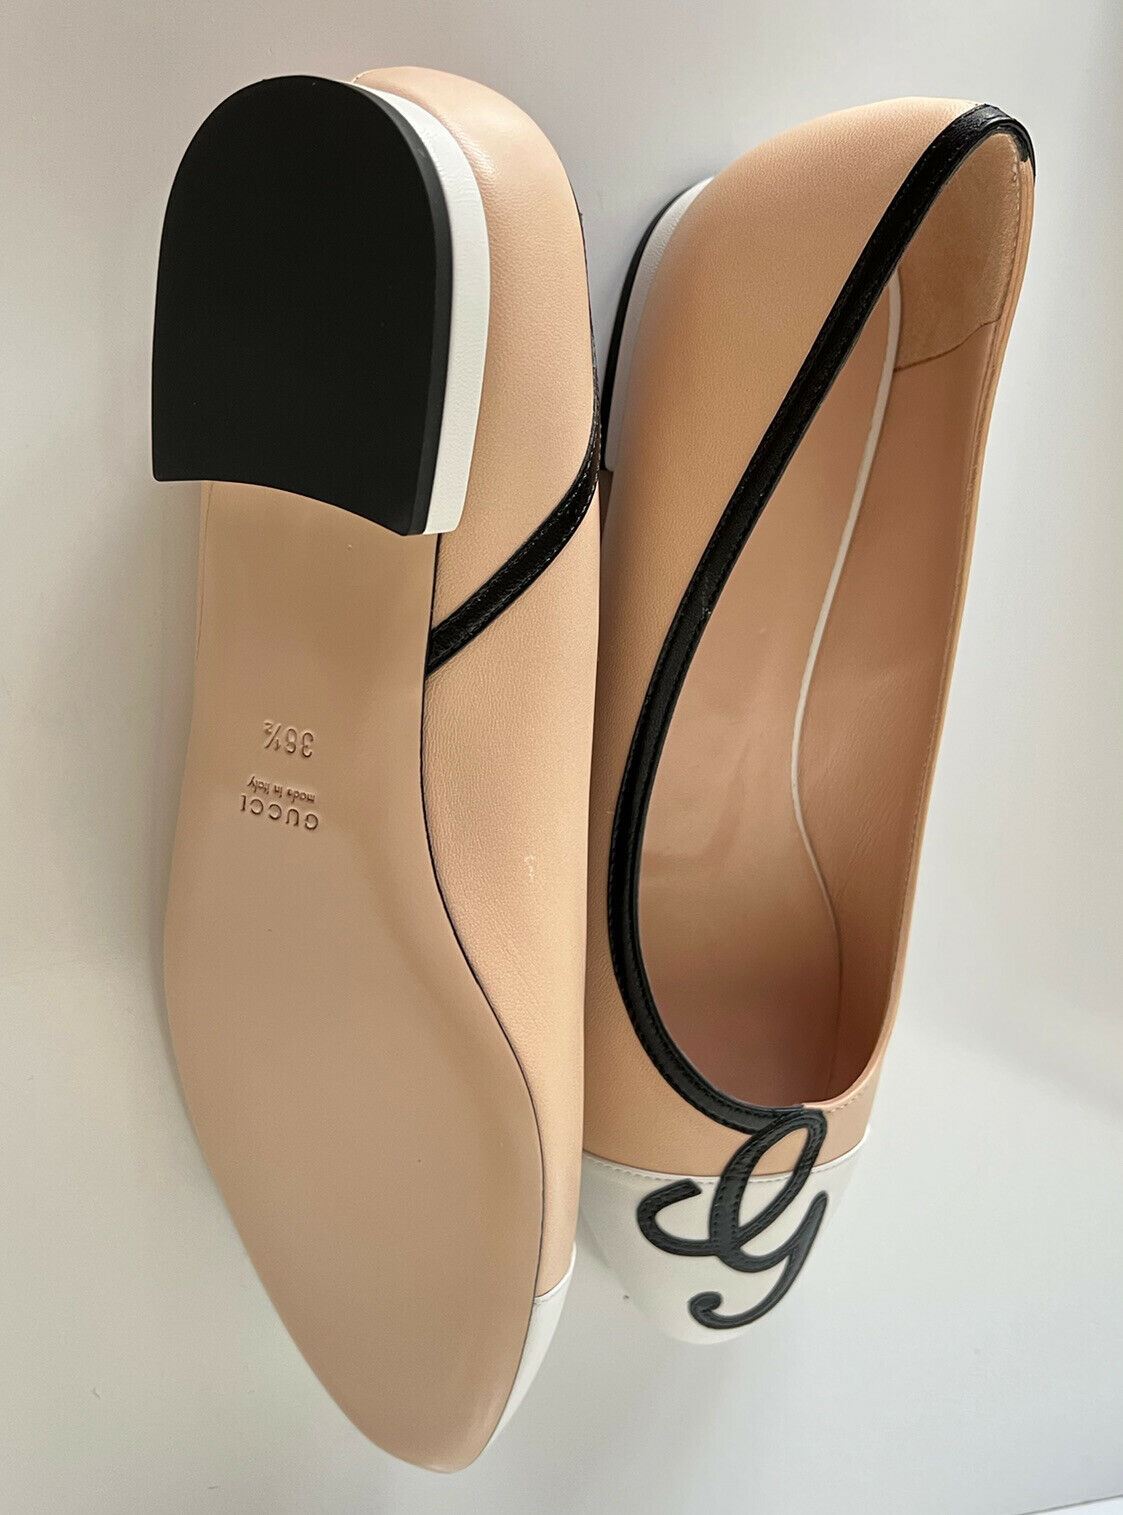 NIB $750 Gucci Women's Leather Slip On Beige/White Flats 9.5 US (39.5 Eu) 658904